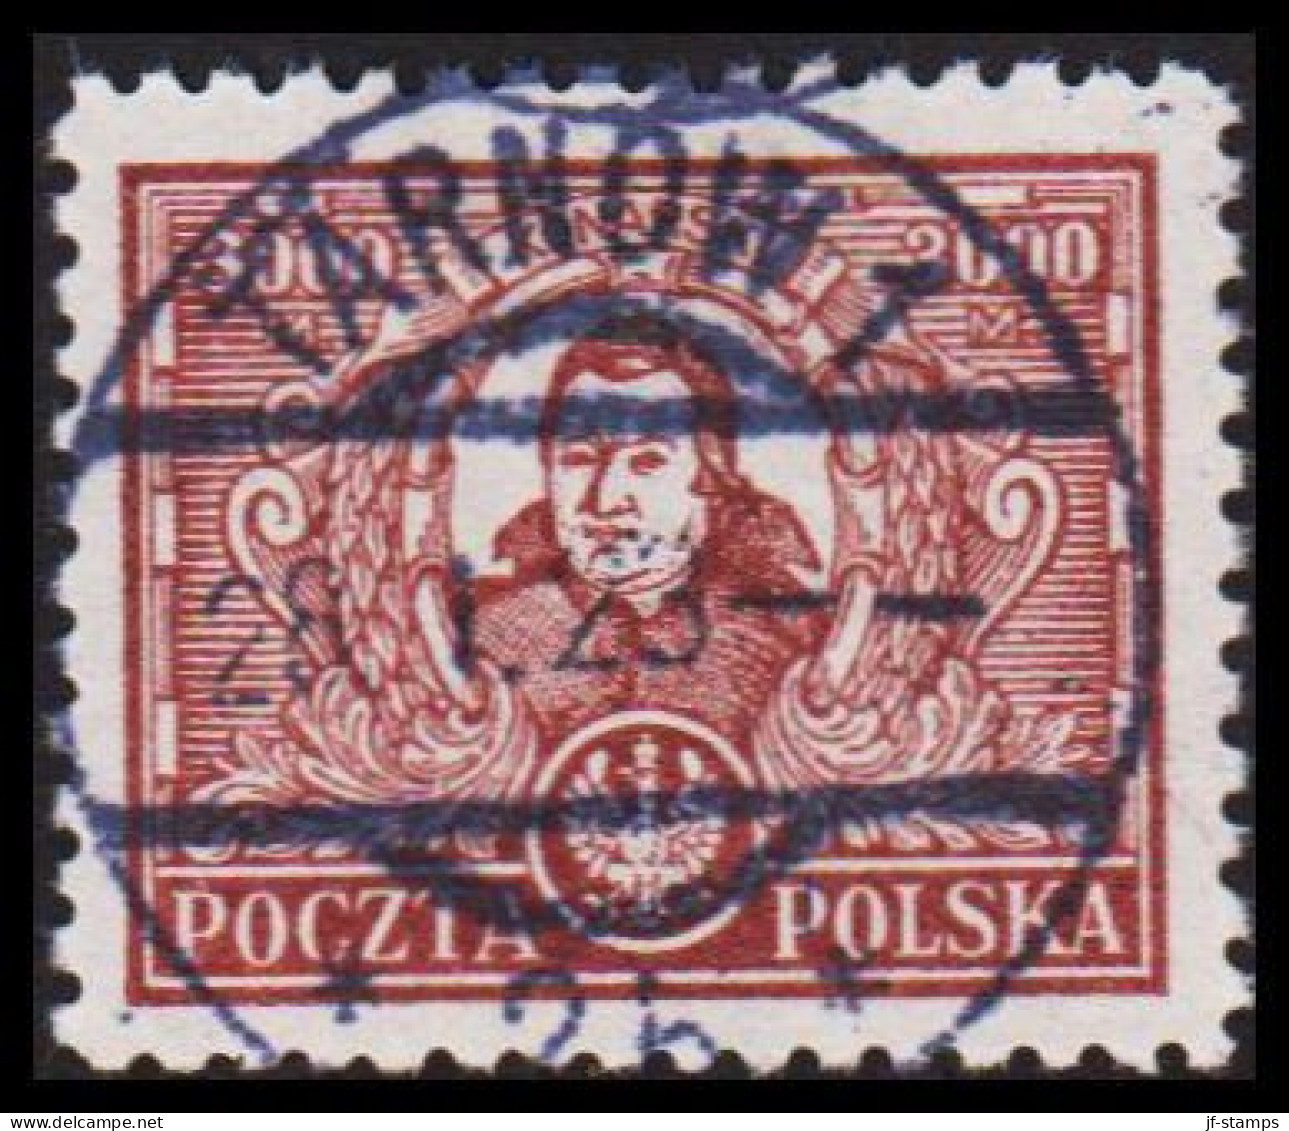 1923. POLSKA.  KONARSKI 3000 M. Luxus Cancel TARNOW 28 1 23.  (Michel 183) - JF545900 - Gebraucht